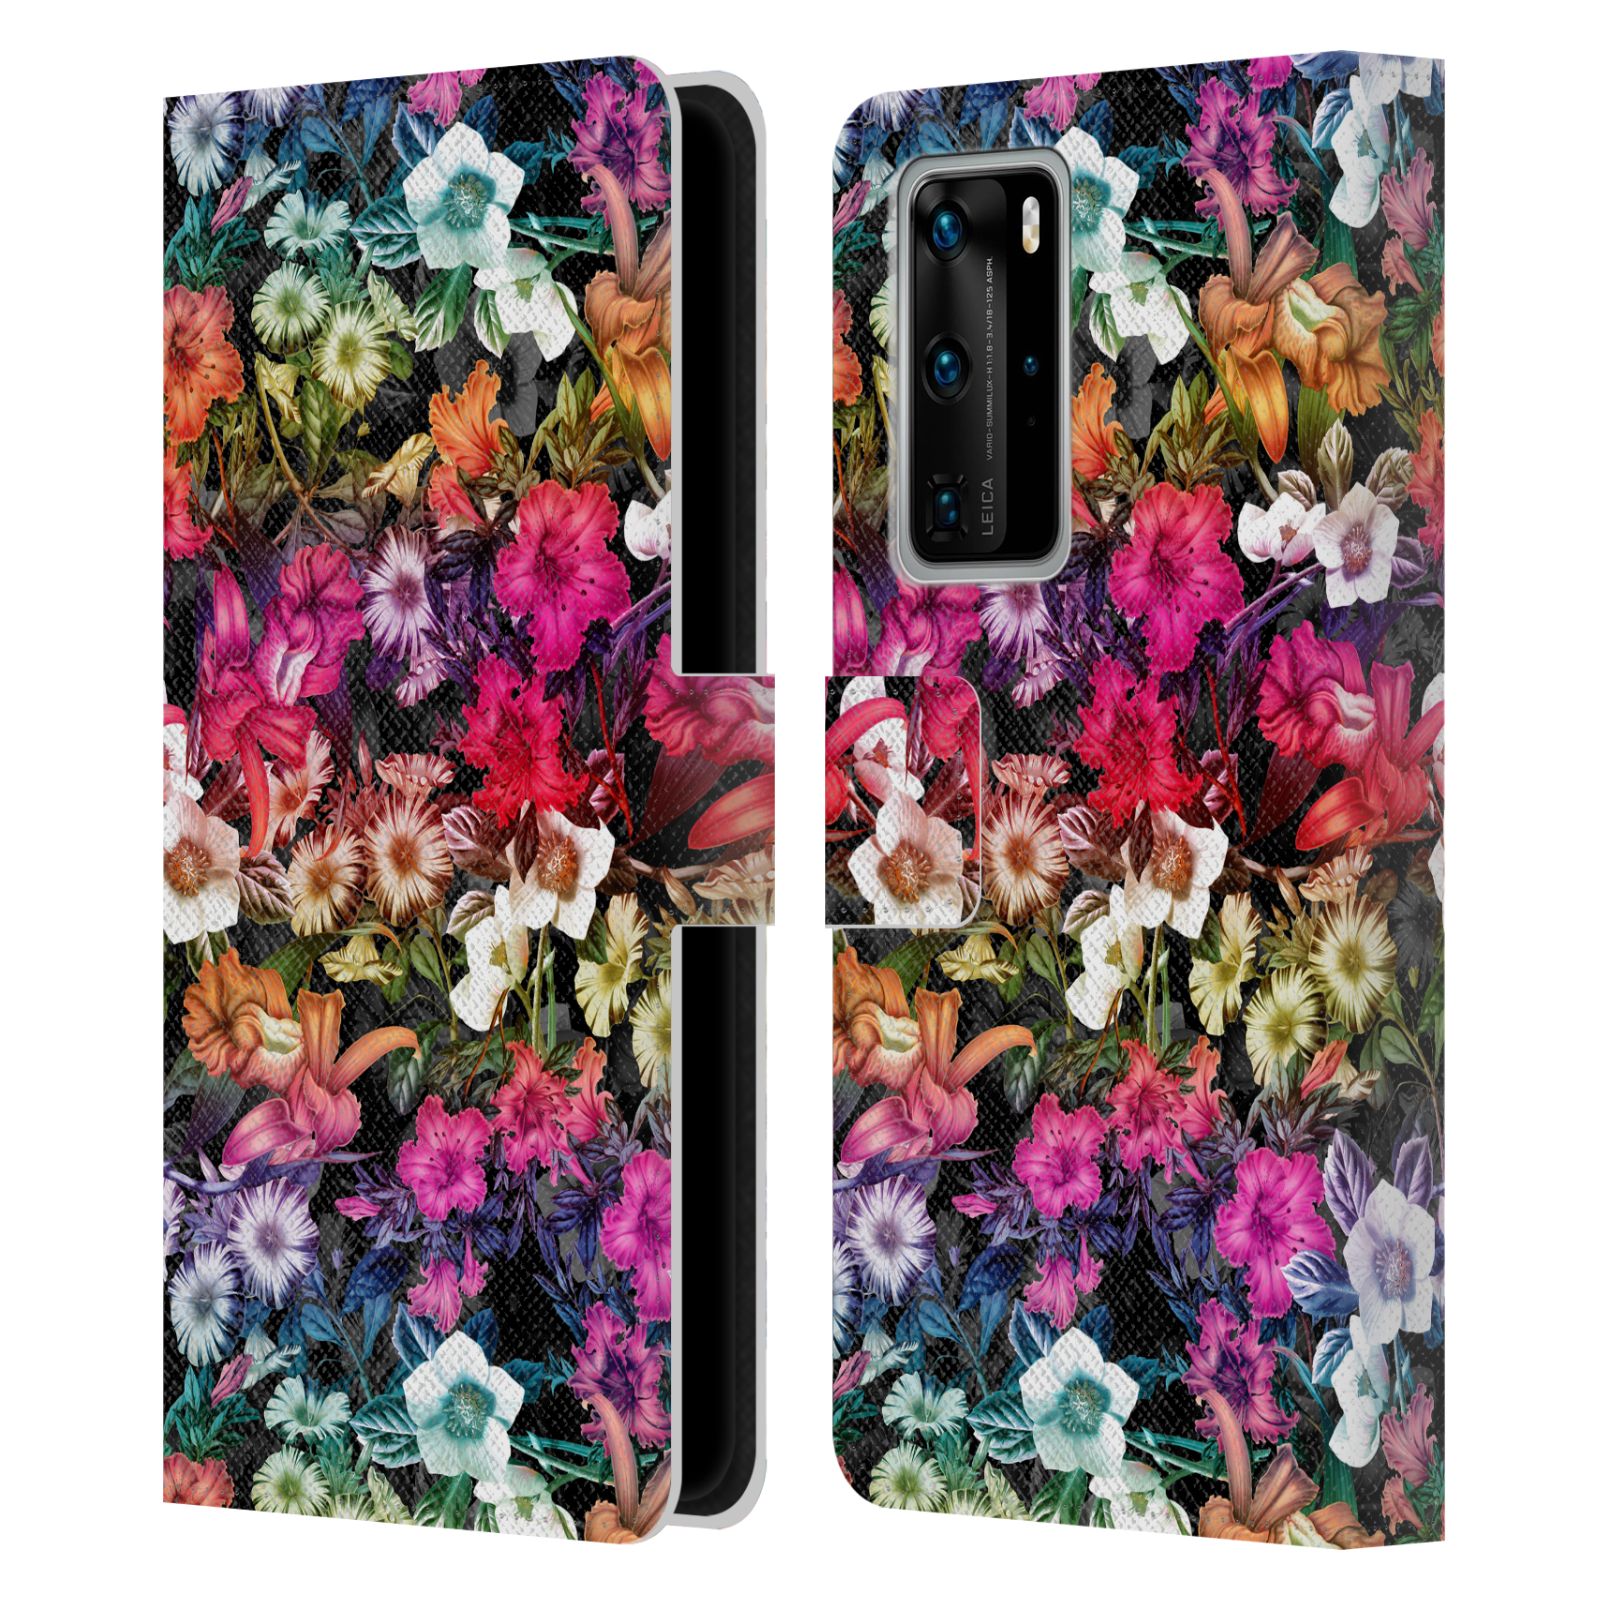 Pouzdro HEAD CASE pro mobil Huawei P40 PRO - Burcu - Květiny multikolor